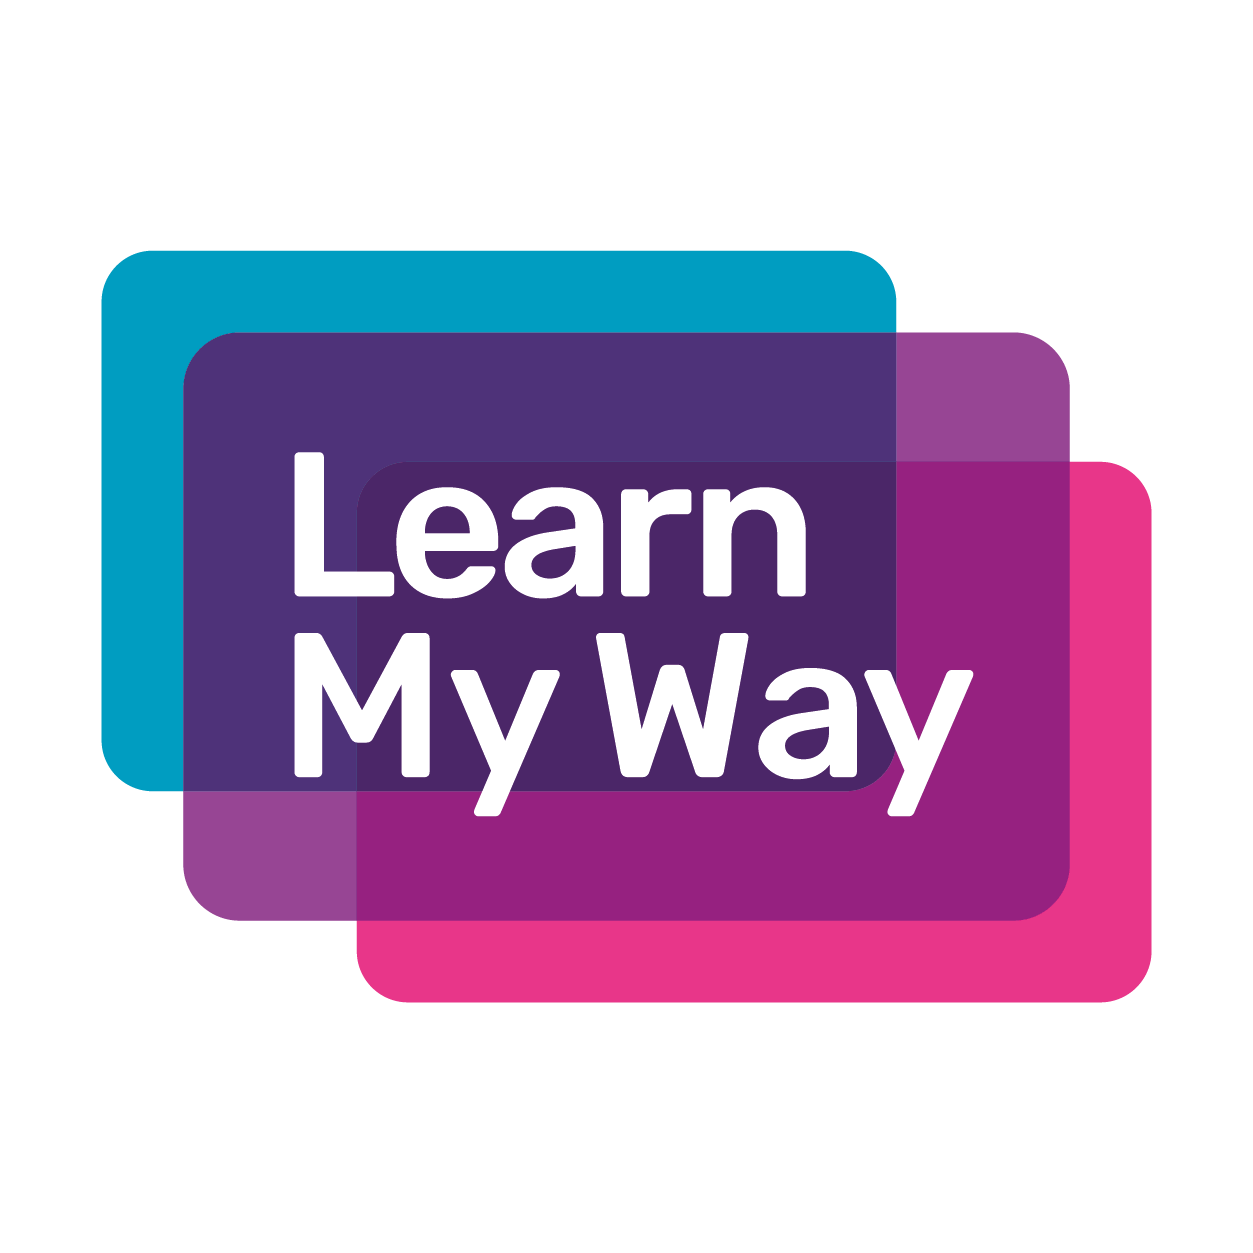 Learn my way logo